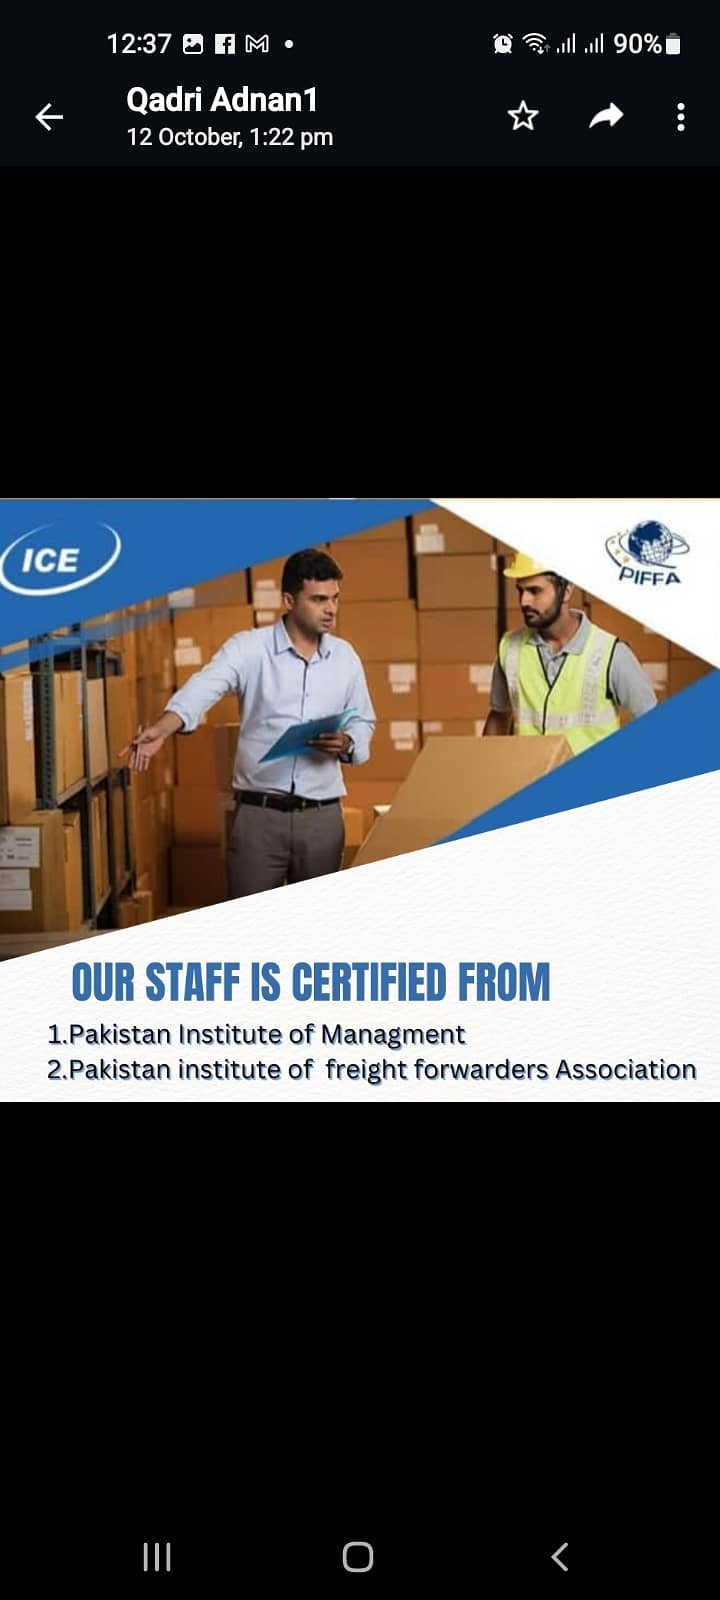 ICE Cargo services send Amazon, Ebay etc. shipments in Warehouses 5